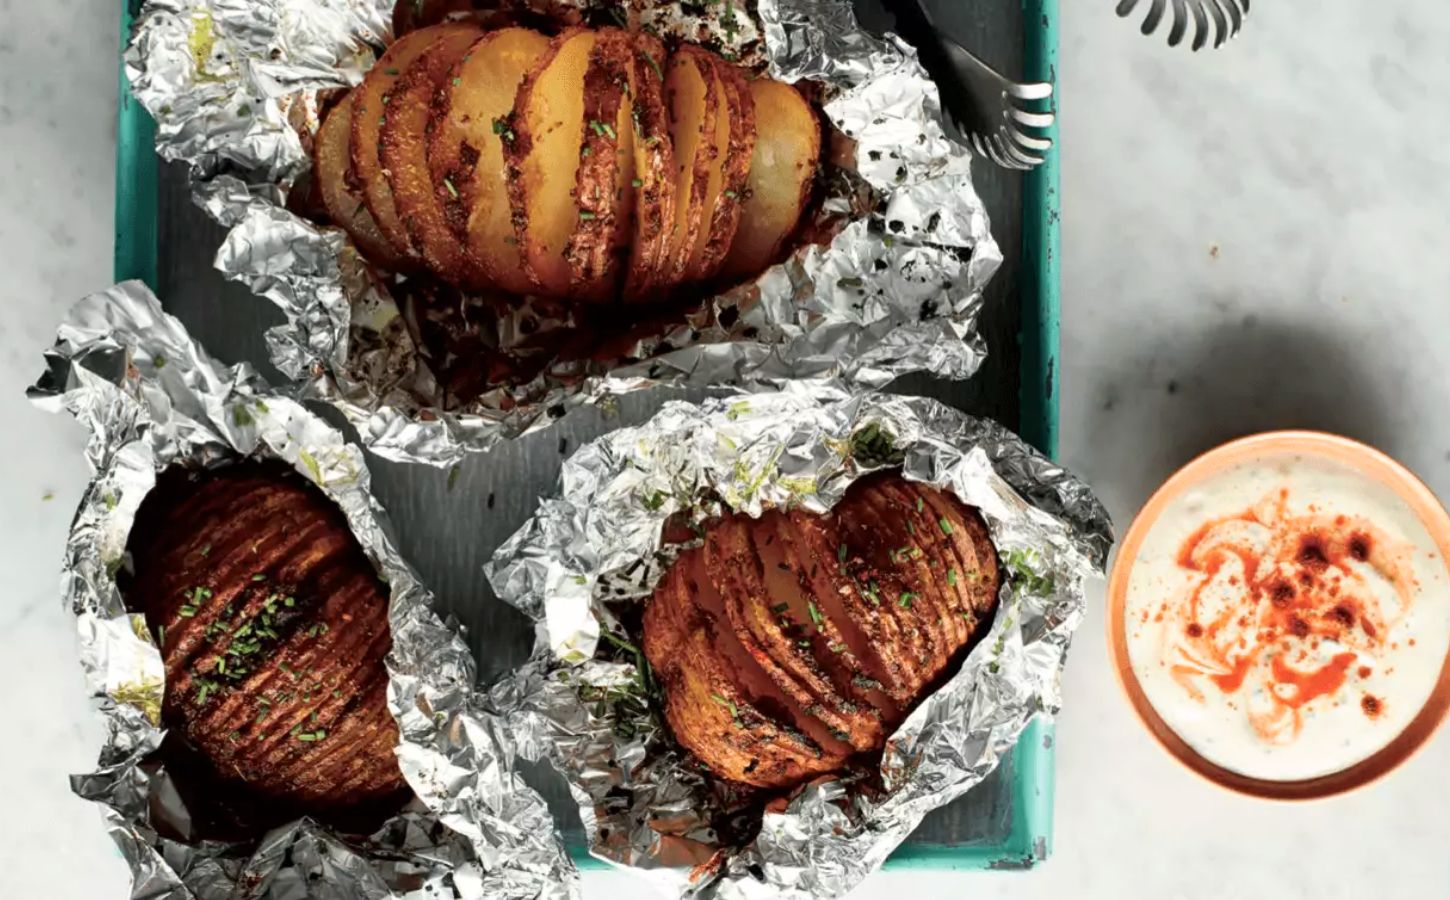 A hasselback sweet potato made to a vegan recipe